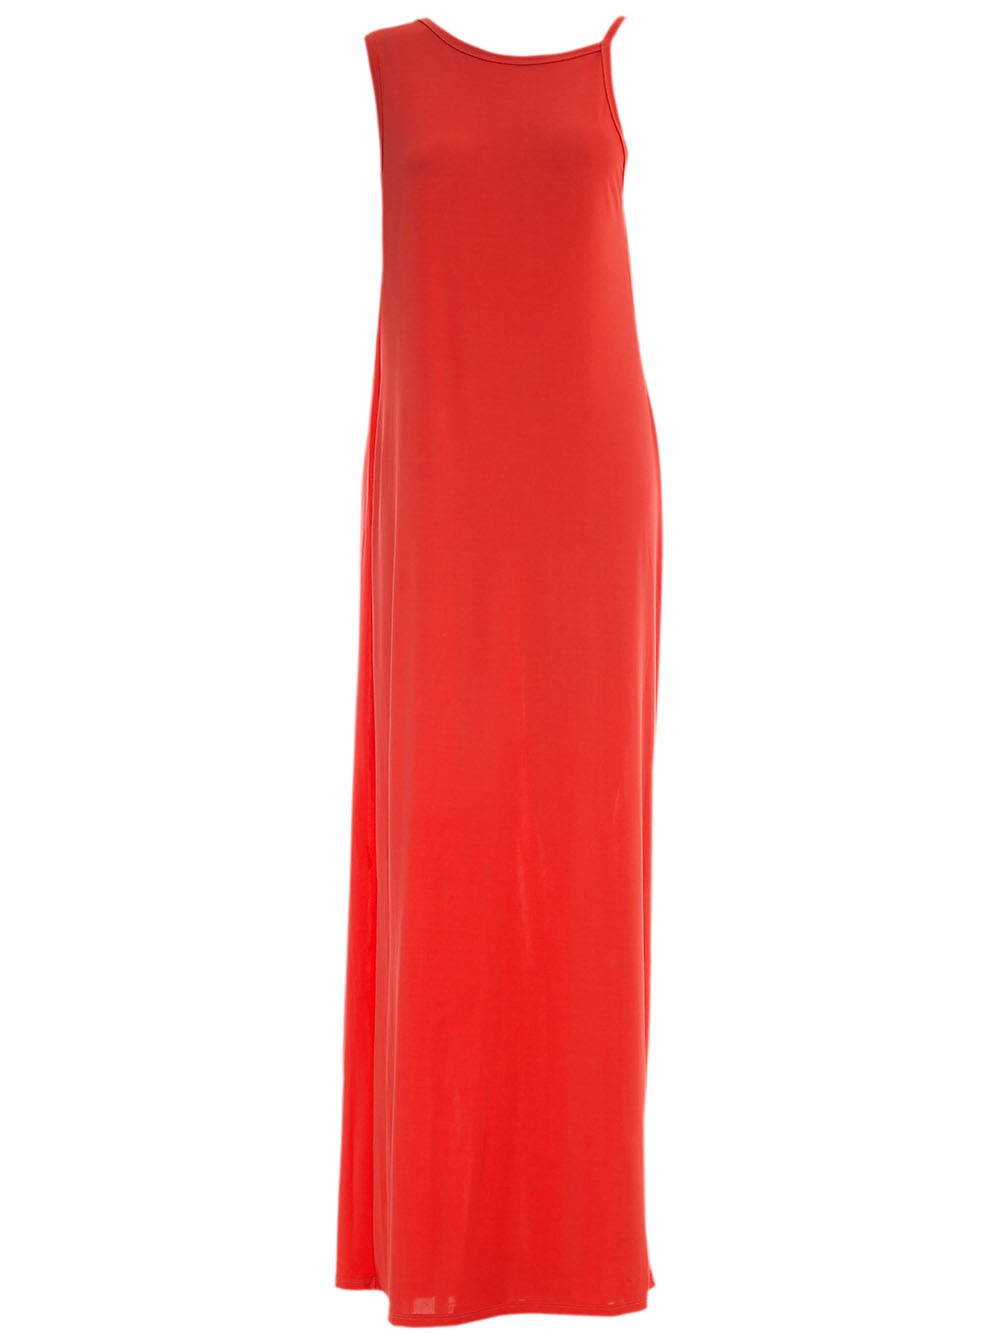 Vestido vermelho tomate Juliana Jabour - R$ 391